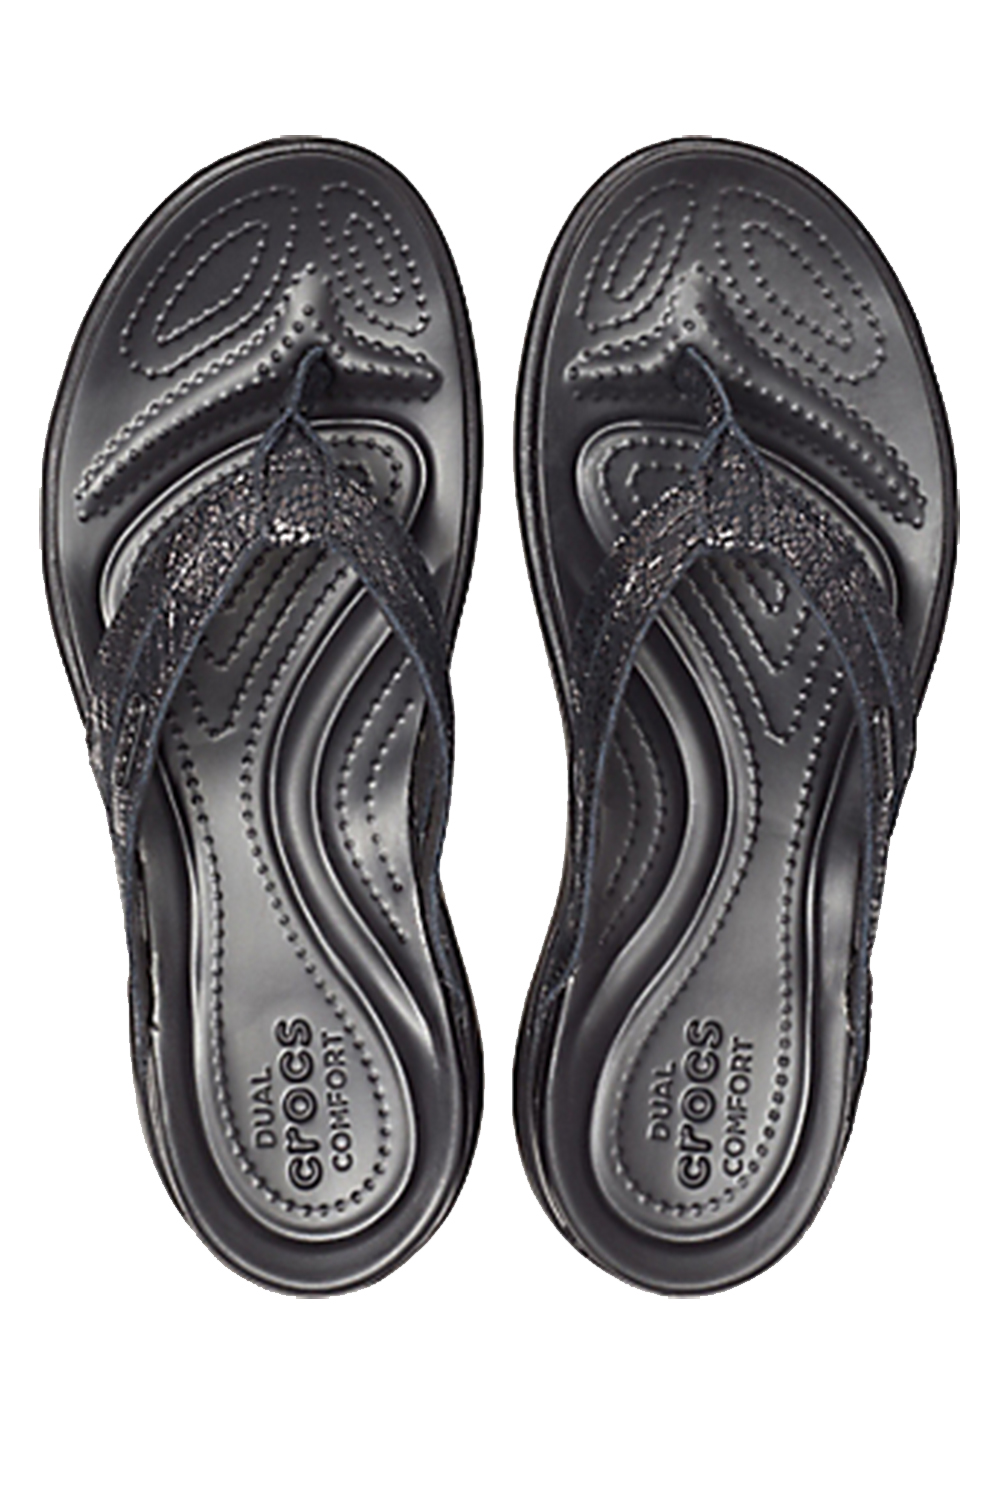 Crocs Womens Capri Strappy Flip Flops Ladies Dual Comfort Cushioned Thong Sandal | eBay